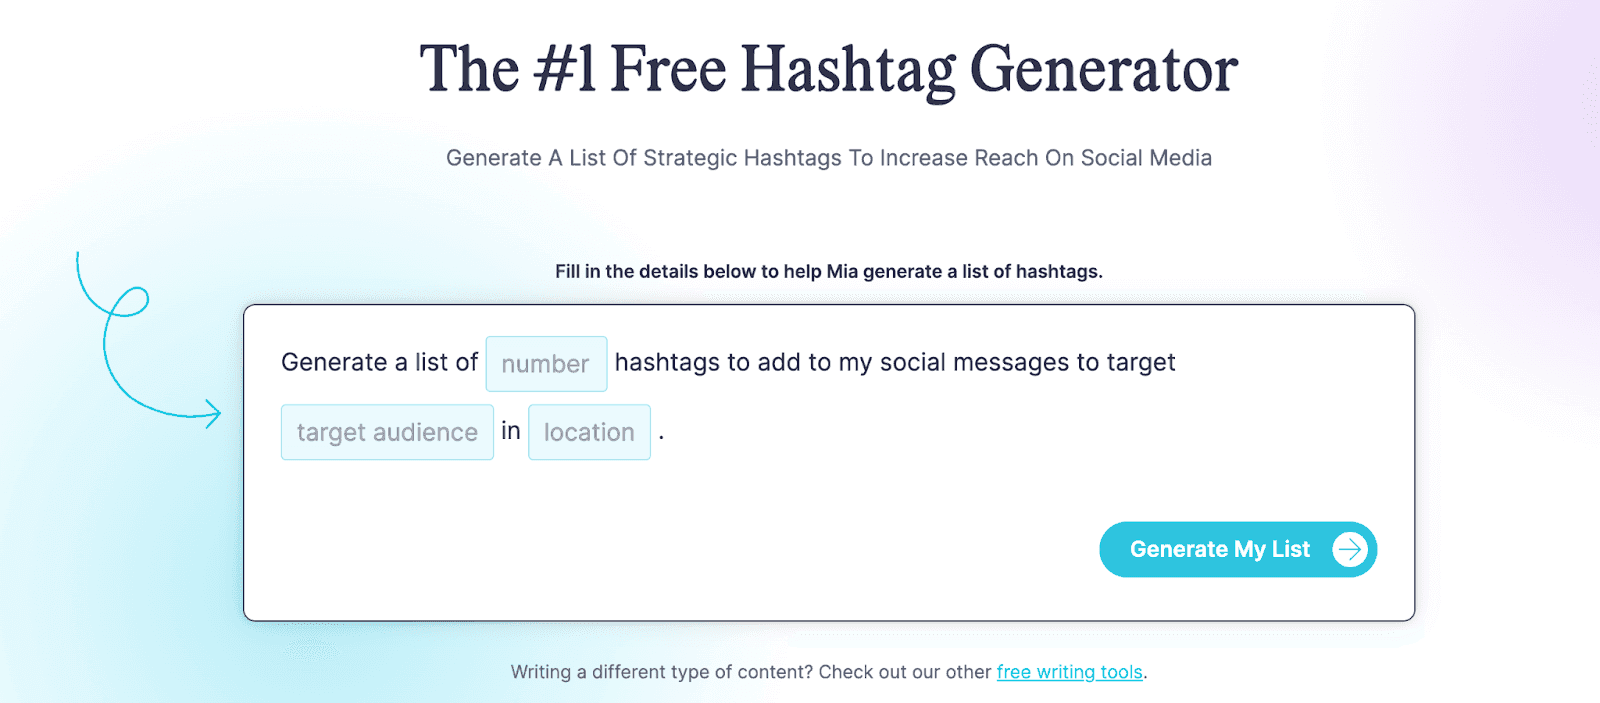 The #1 free hashtag generator